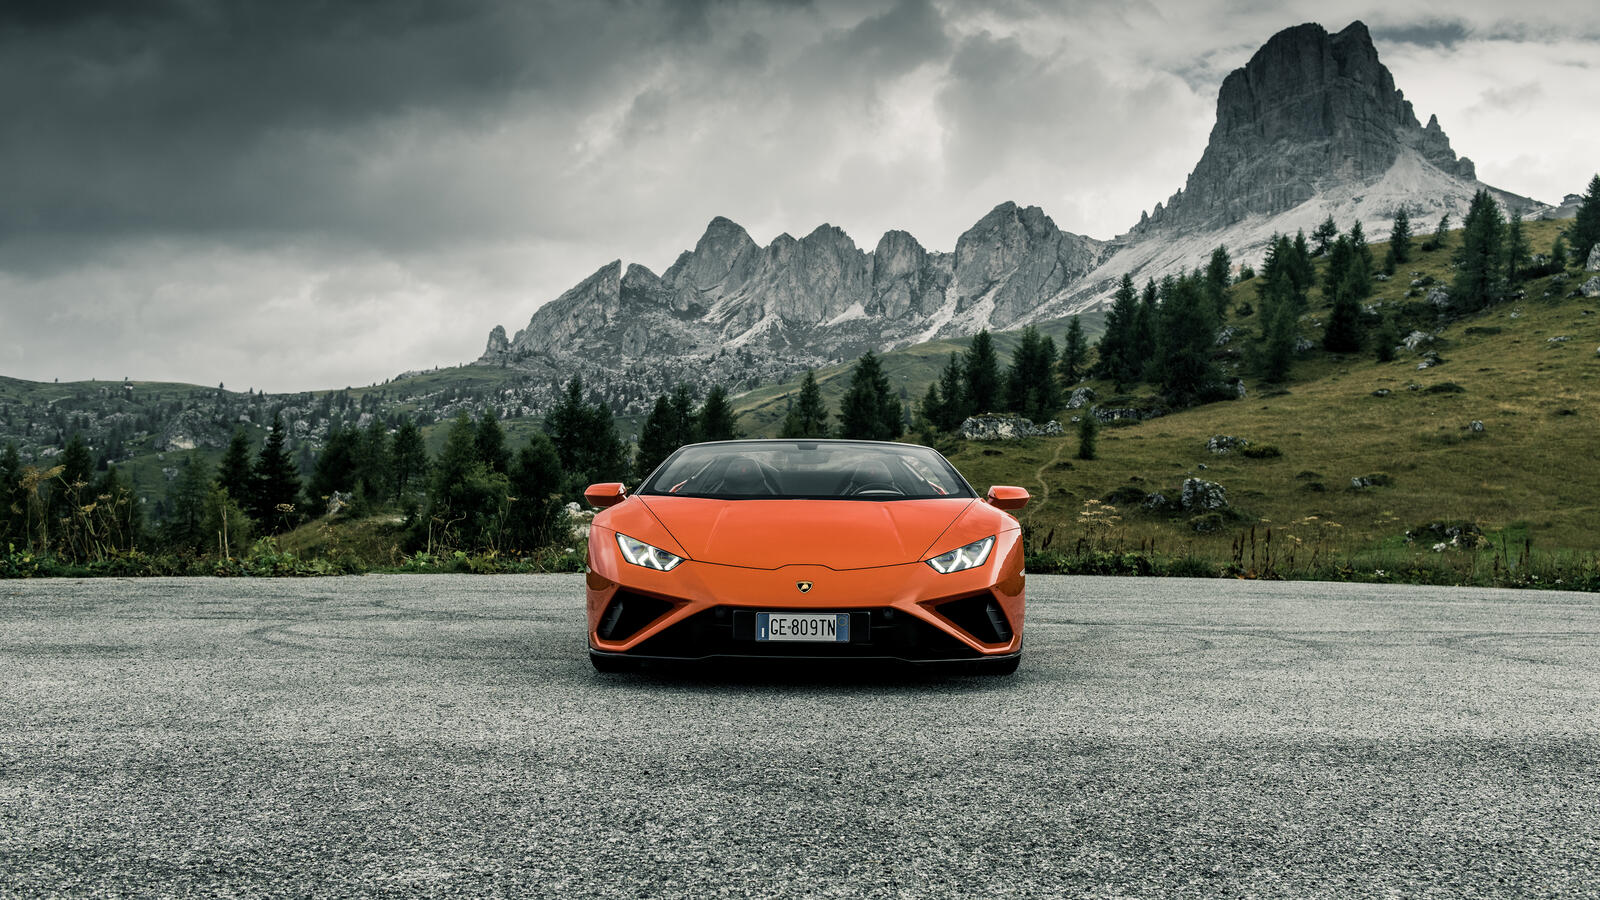 Бесплатное фото Оранжевая Lamborghini Huracan Evo Spyder на фоне гор